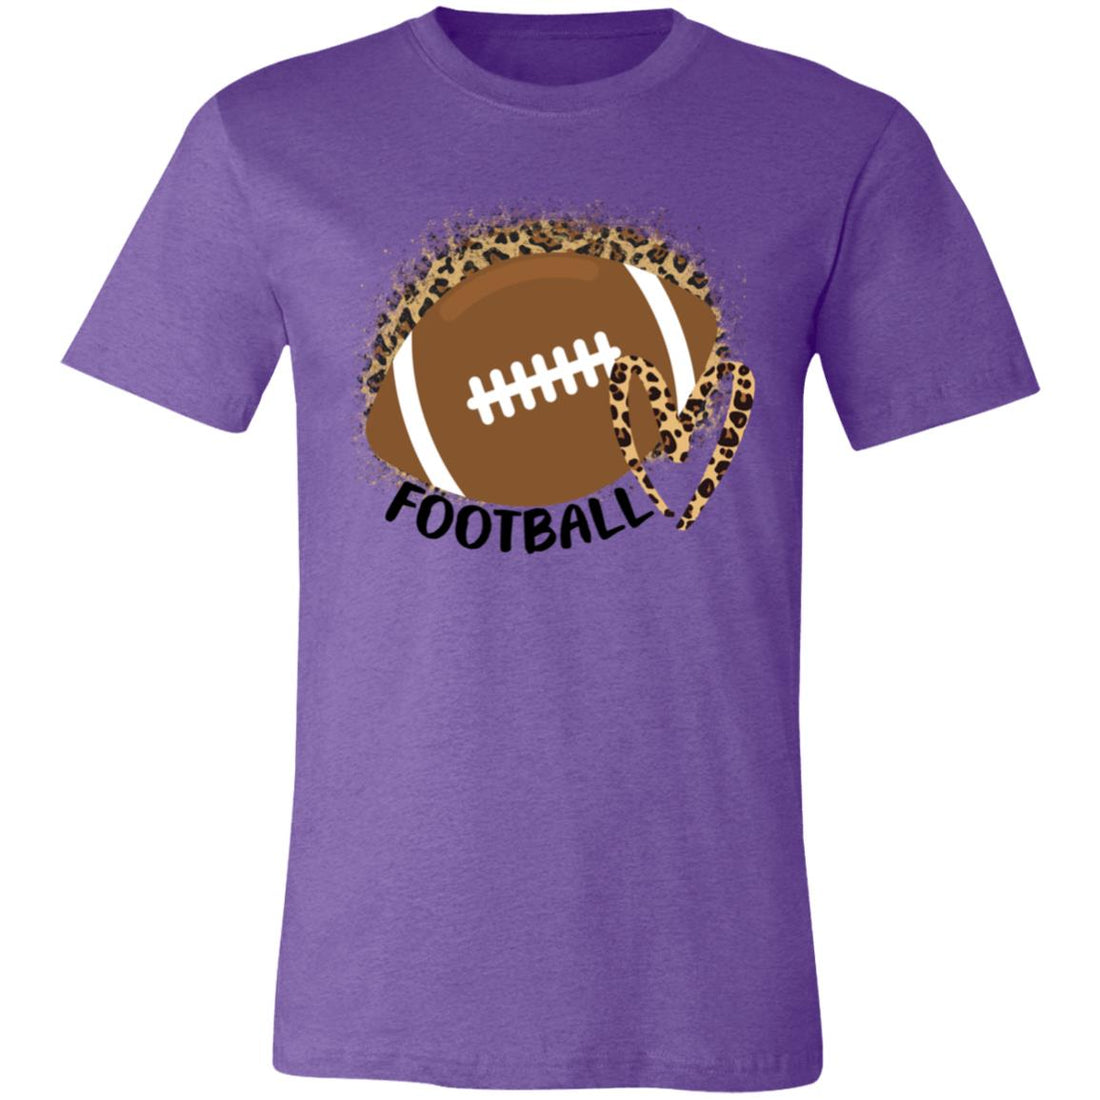 Football Love Cheetah Short-Sleeve T-Shirt - T-Shirts - Positively Sassy - Football Love Cheetah Short-Sleeve T-Shirt